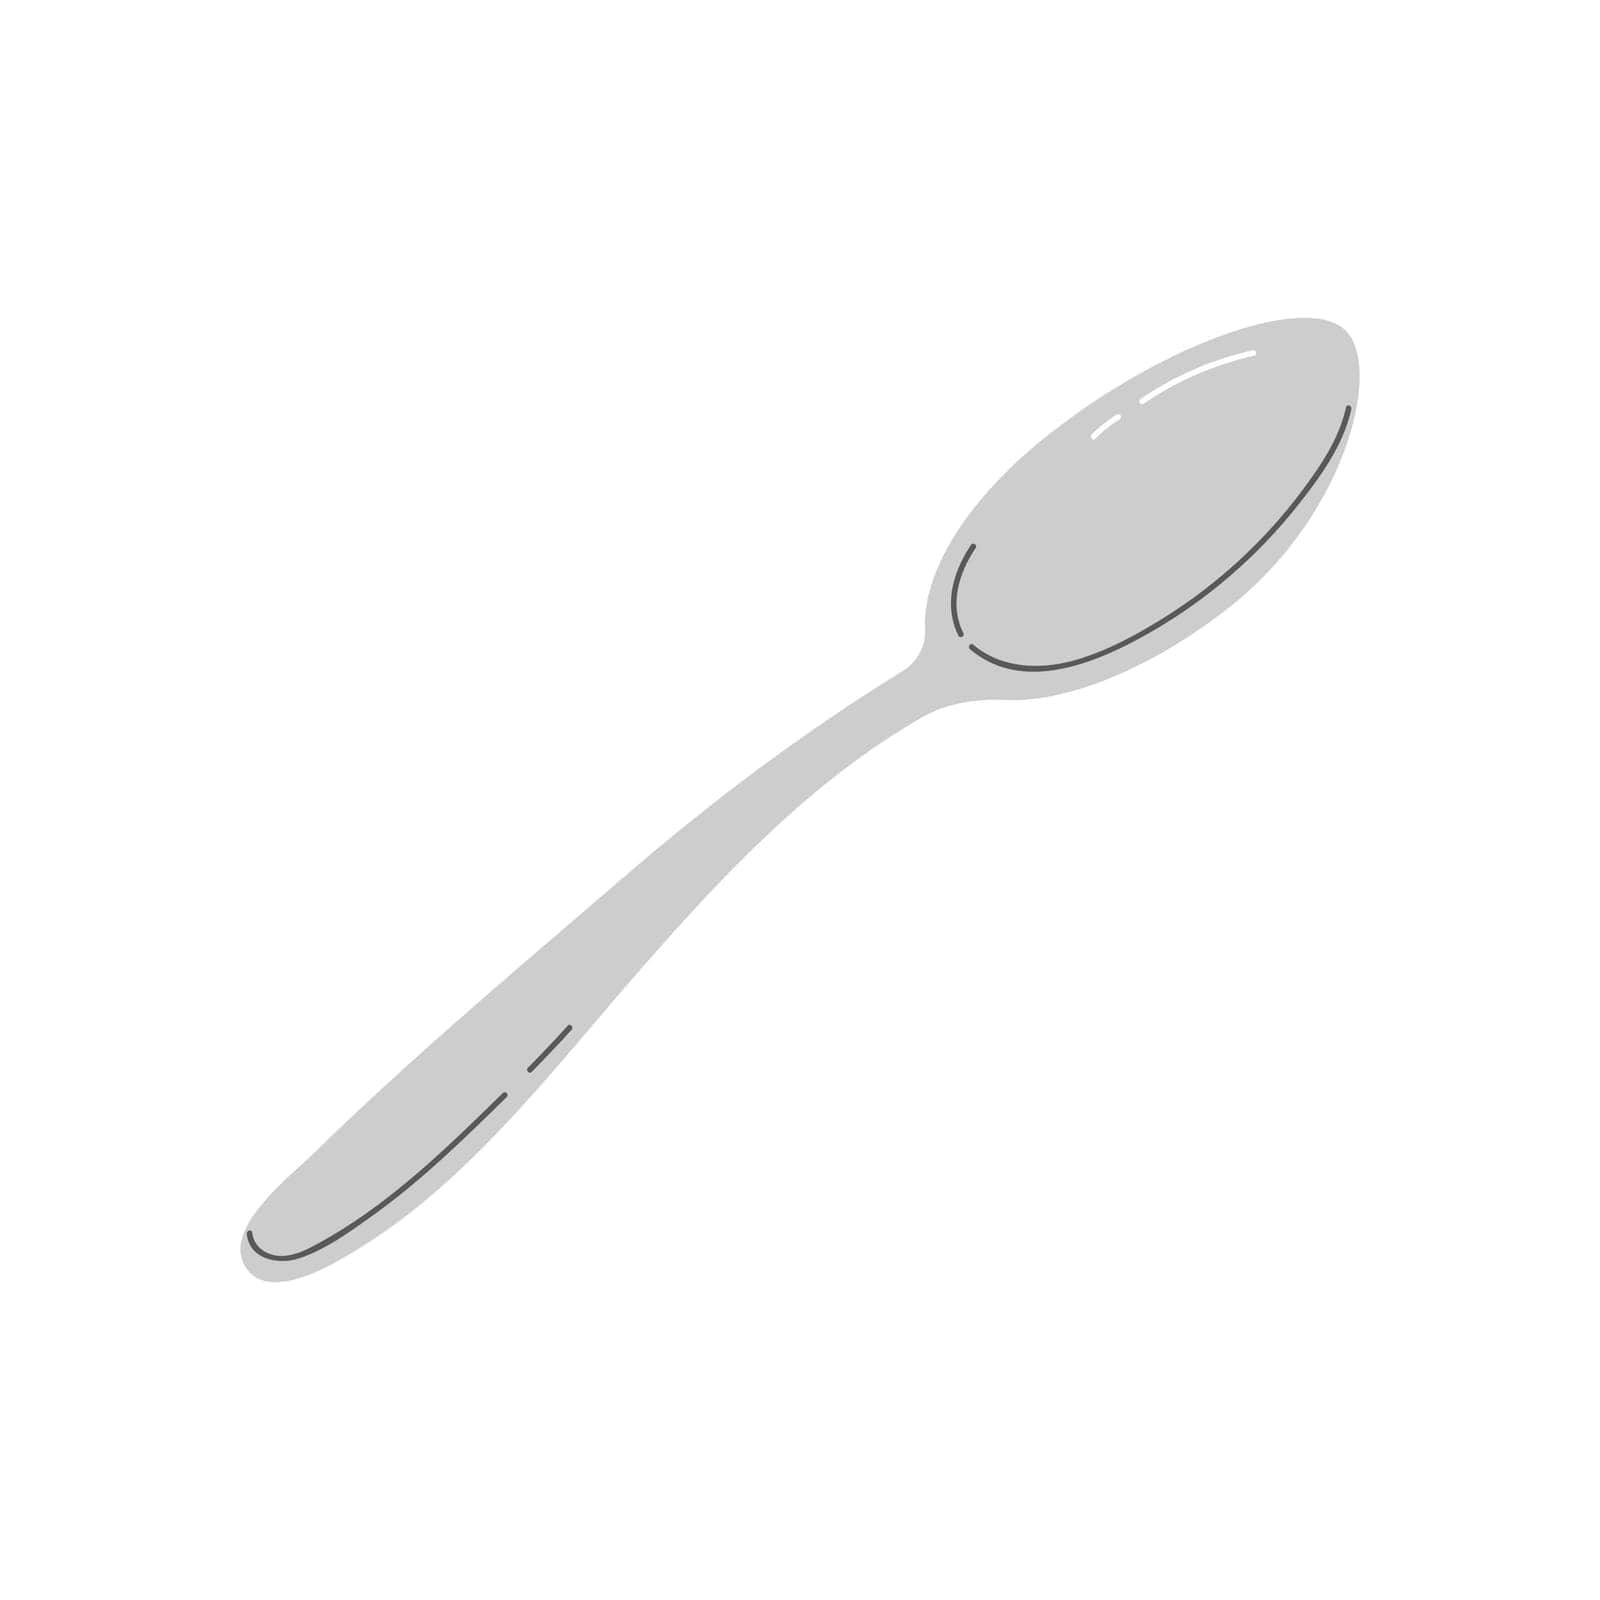 Metal or silver spoon, top view of teaspoon, utensil for food serving vector illustration